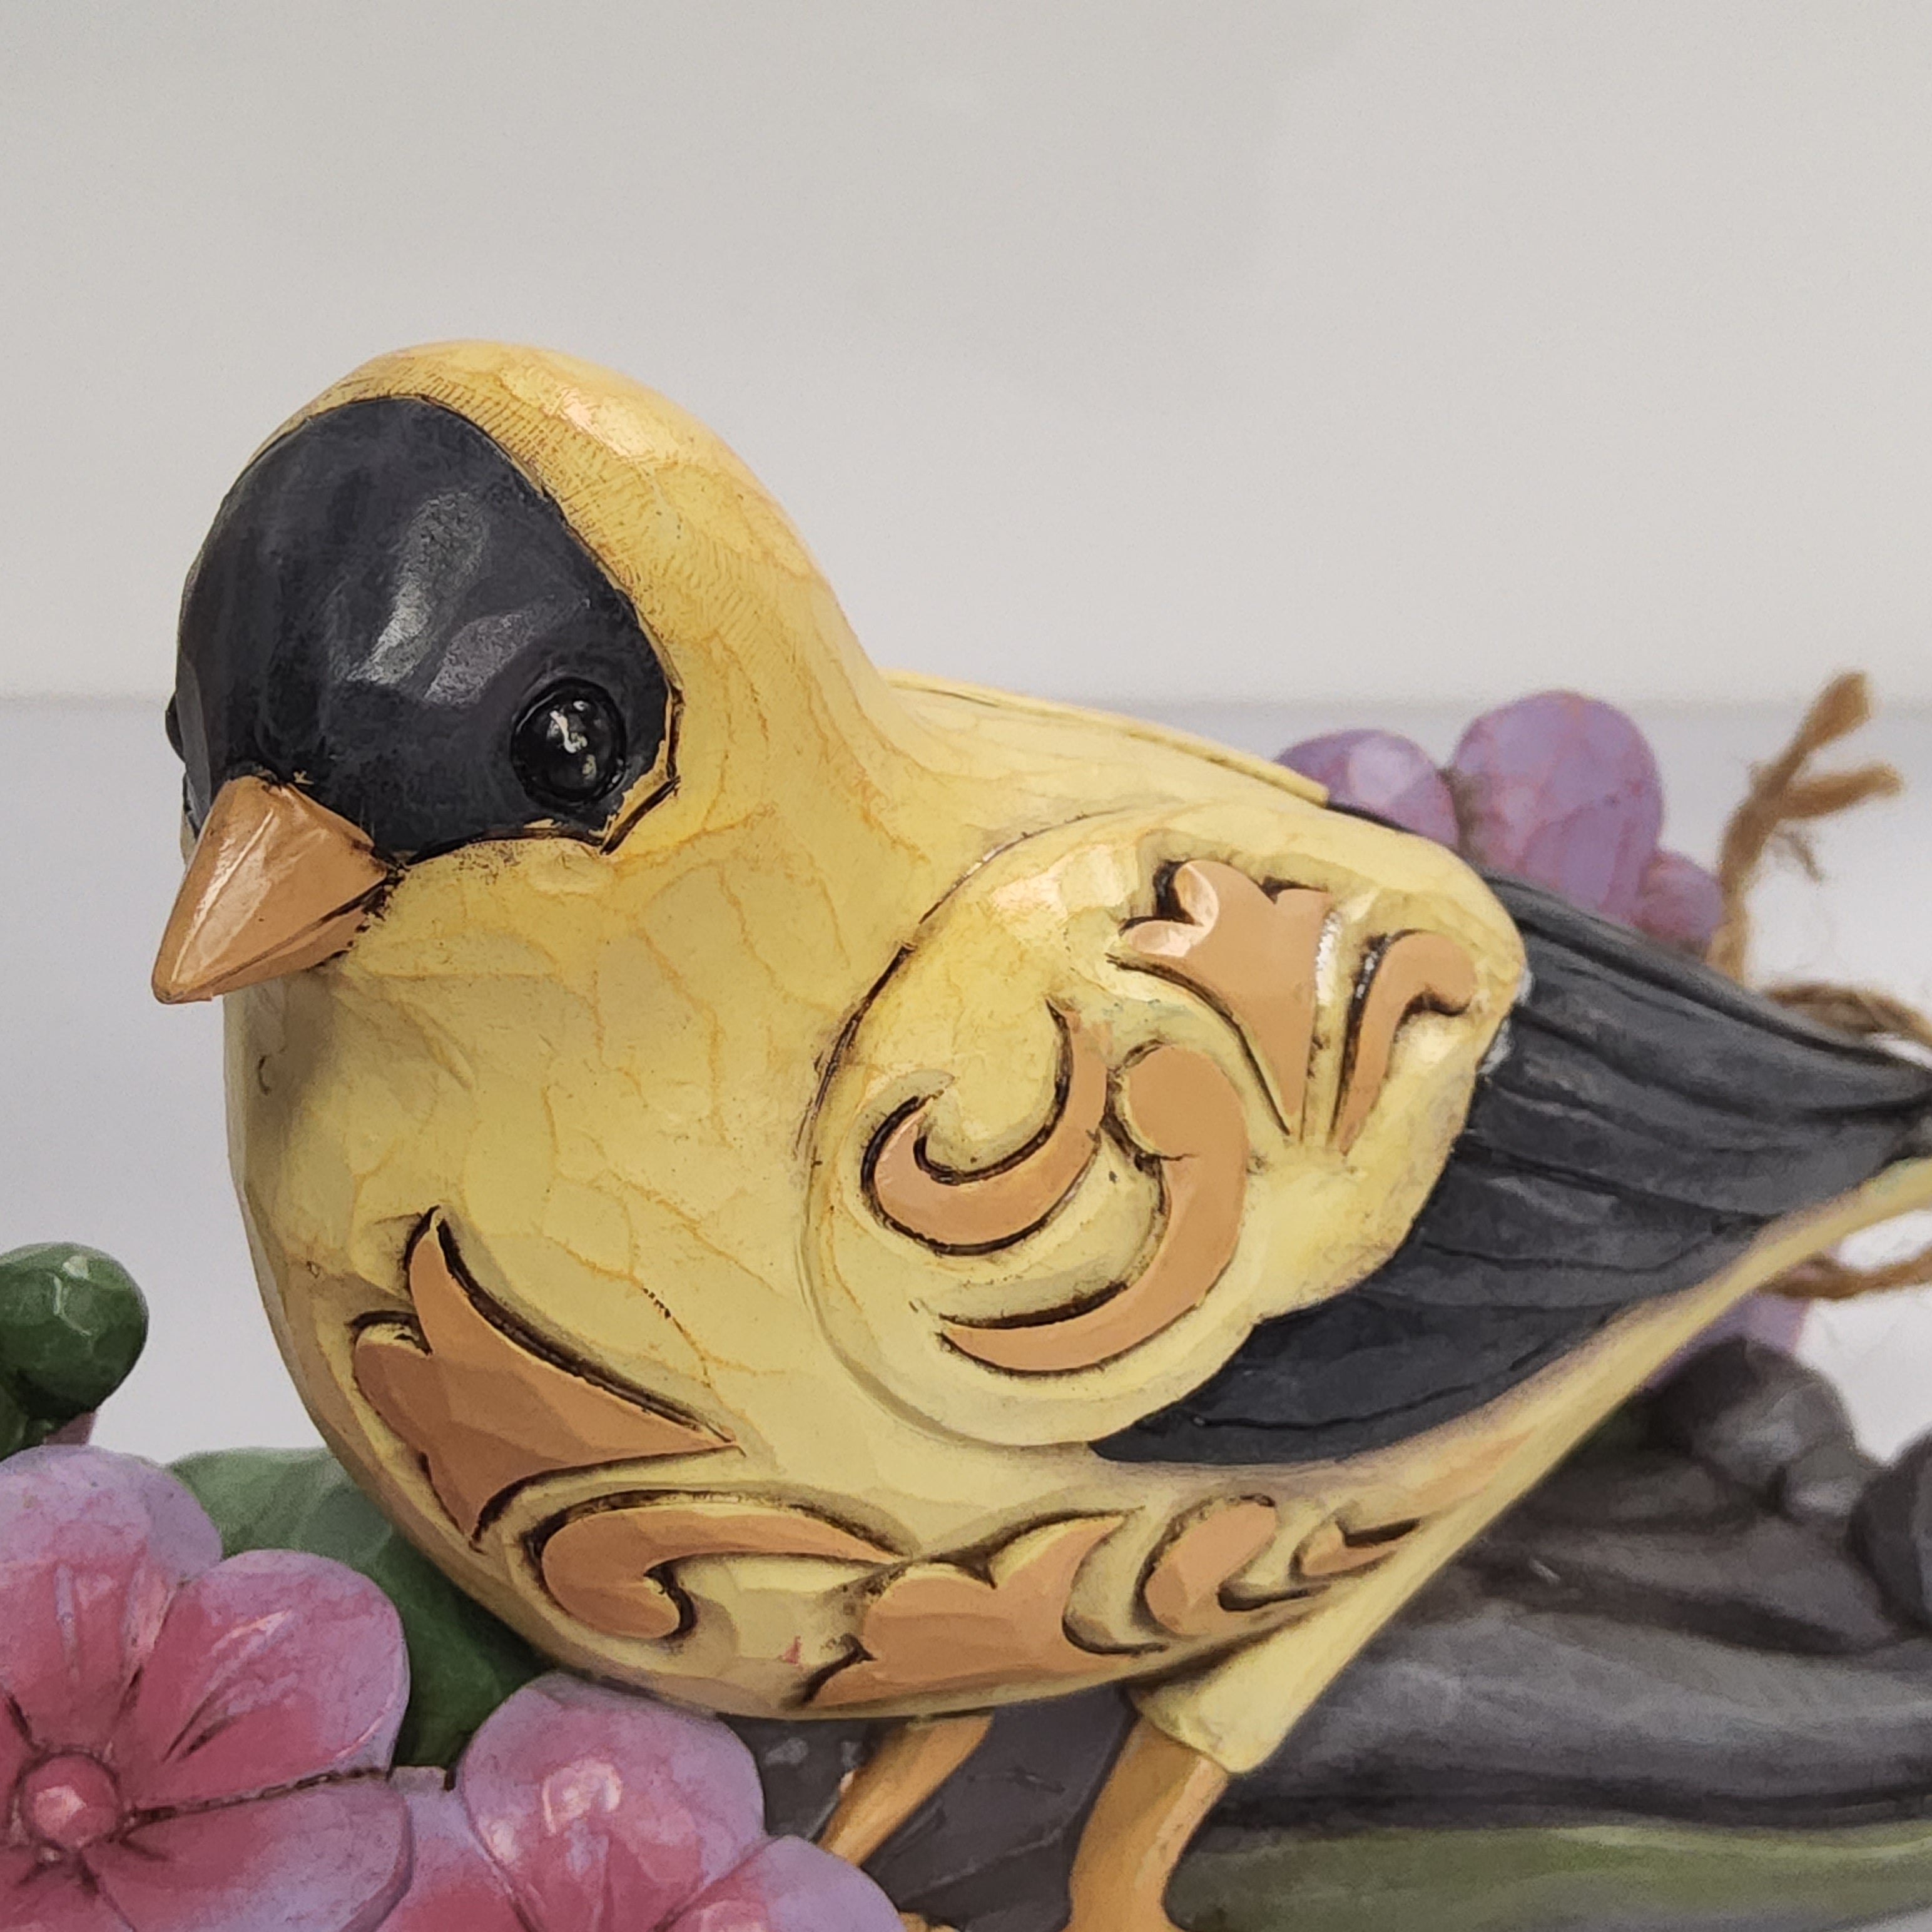 Enesco / Jim Shore Bird Figurine - Goldfinch - "Golden Harmony" 6010282